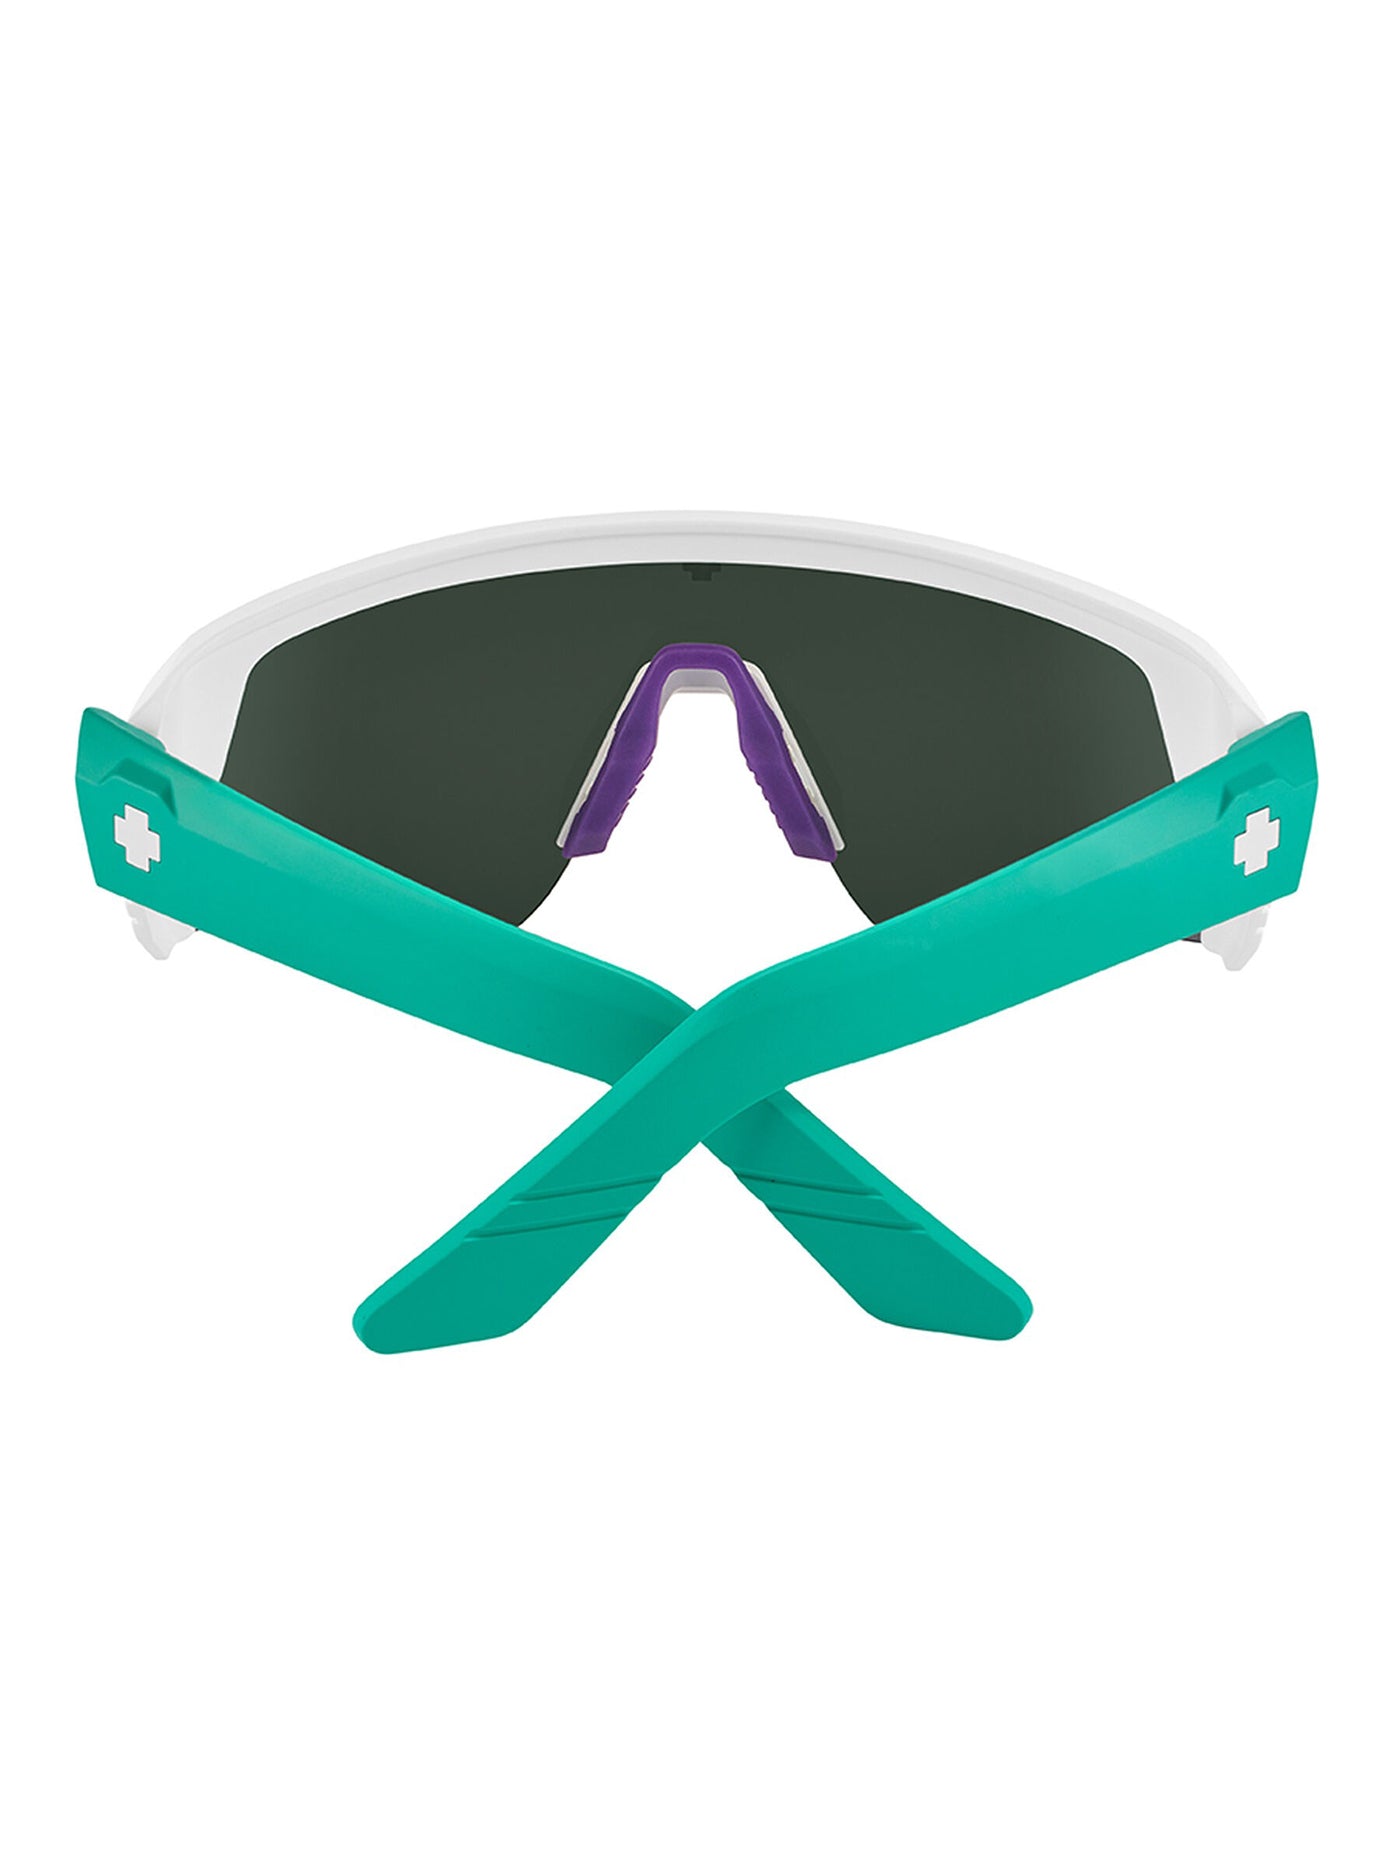 Spy Monolith Speed Matte White Teal/Green Purple Sunglasses